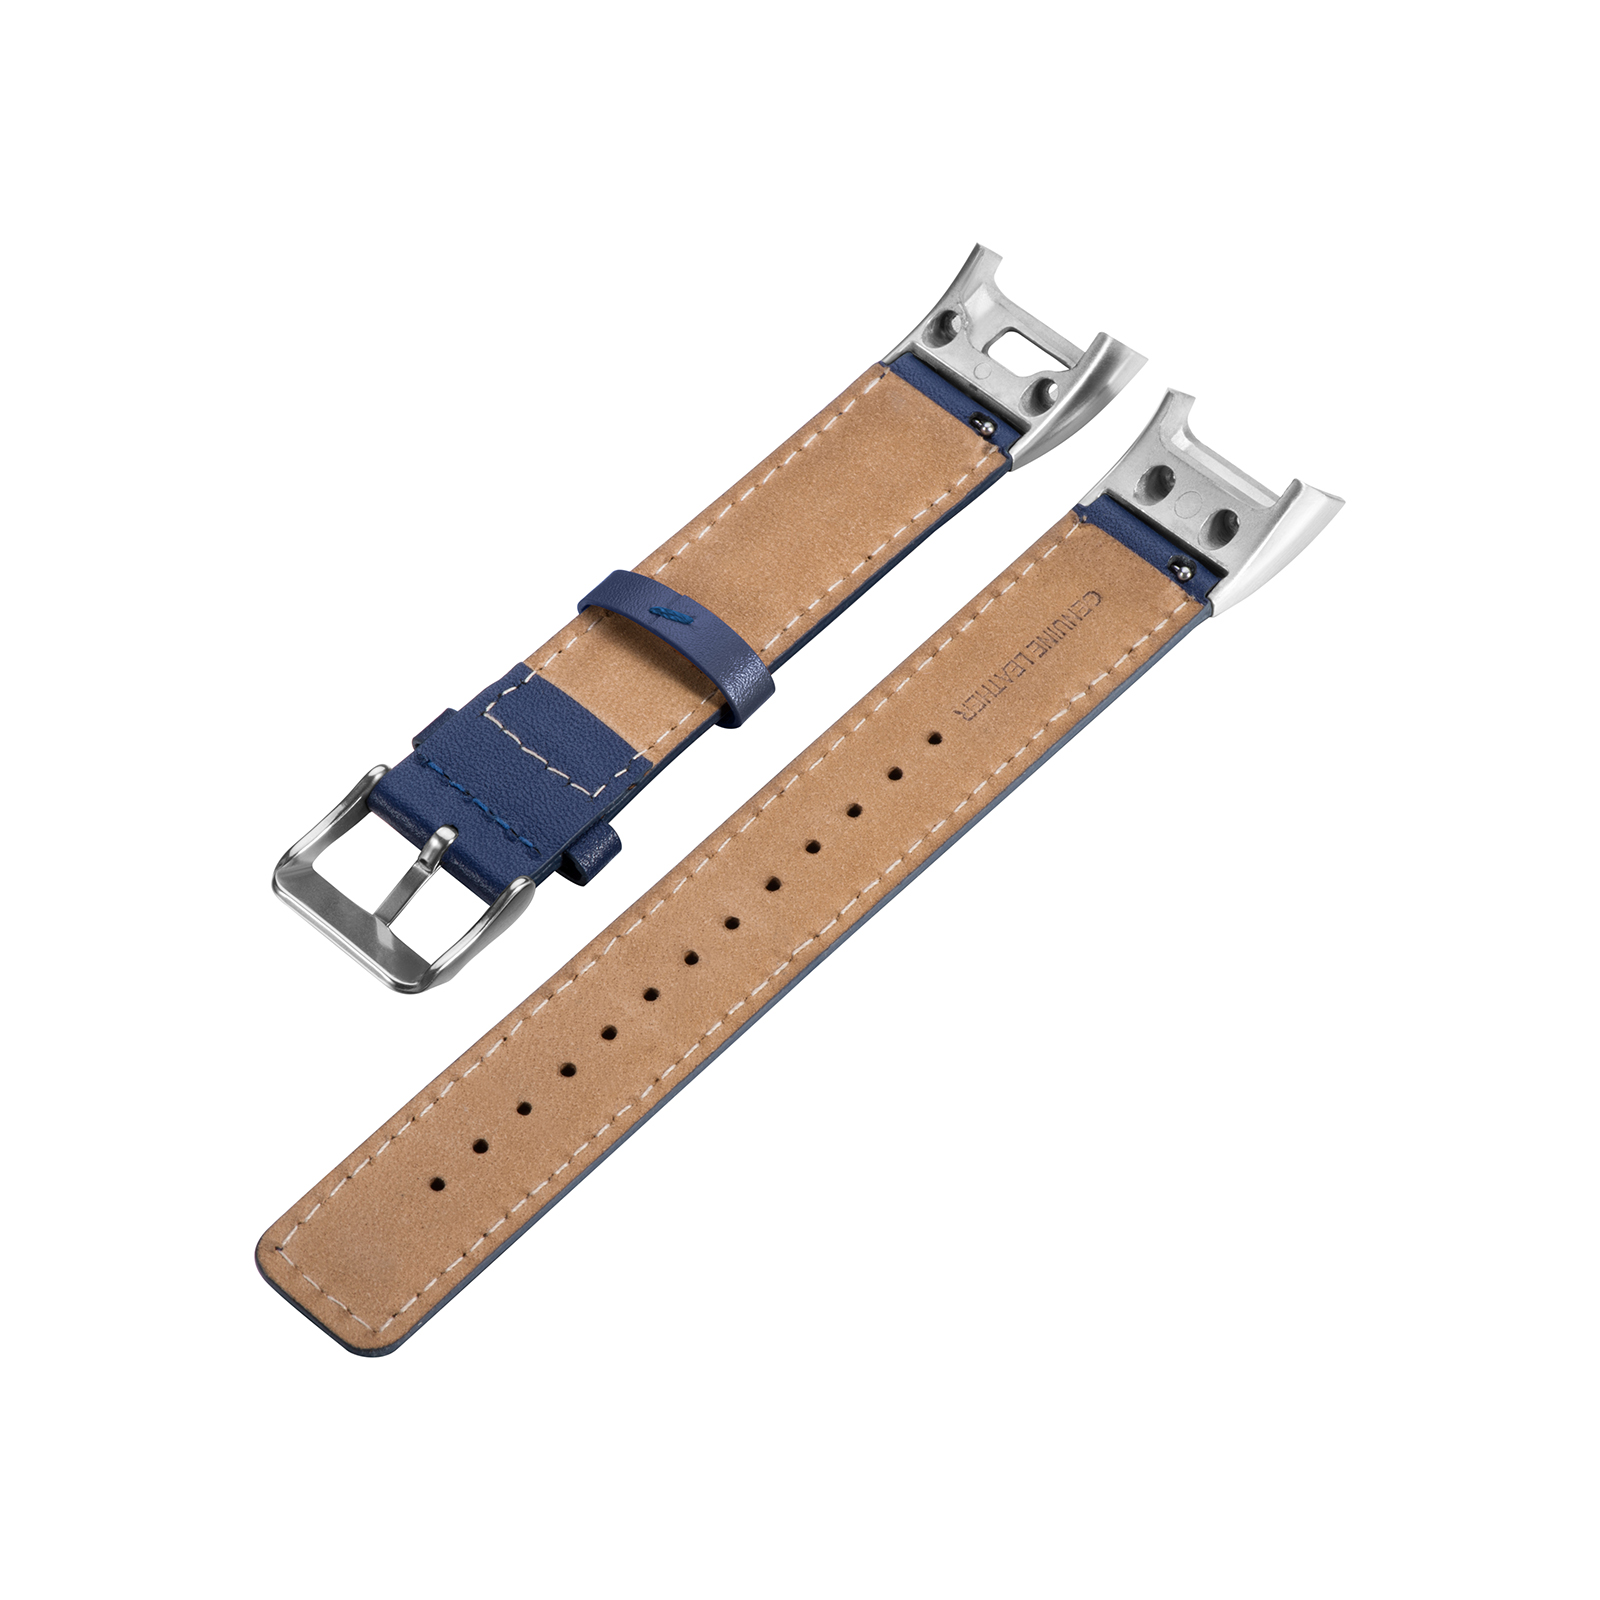 Bakeey-Retro-Metal-Buckle-Leather-Strap-Smart-Watch-Band-For-Garmin-Vivosmart-HR-1739351-9